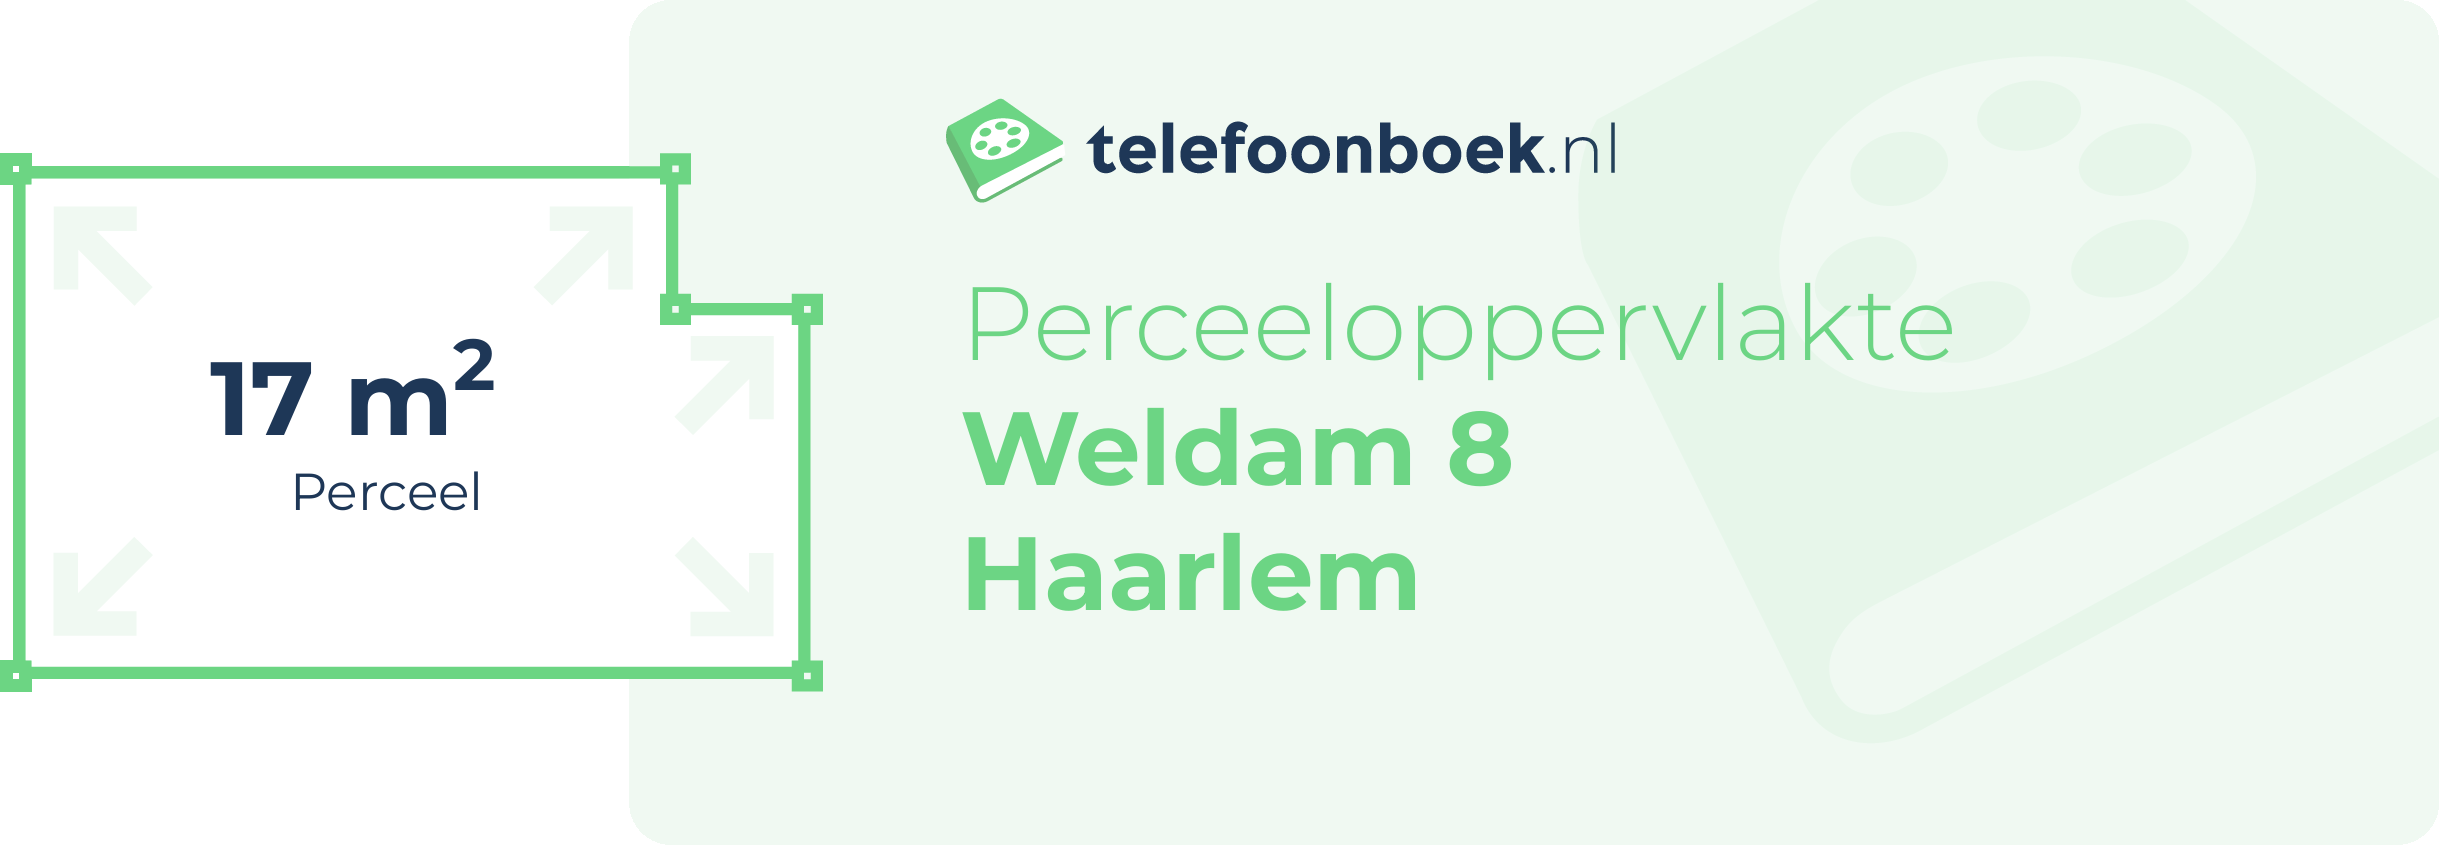 Perceeloppervlakte Weldam 8 Haarlem